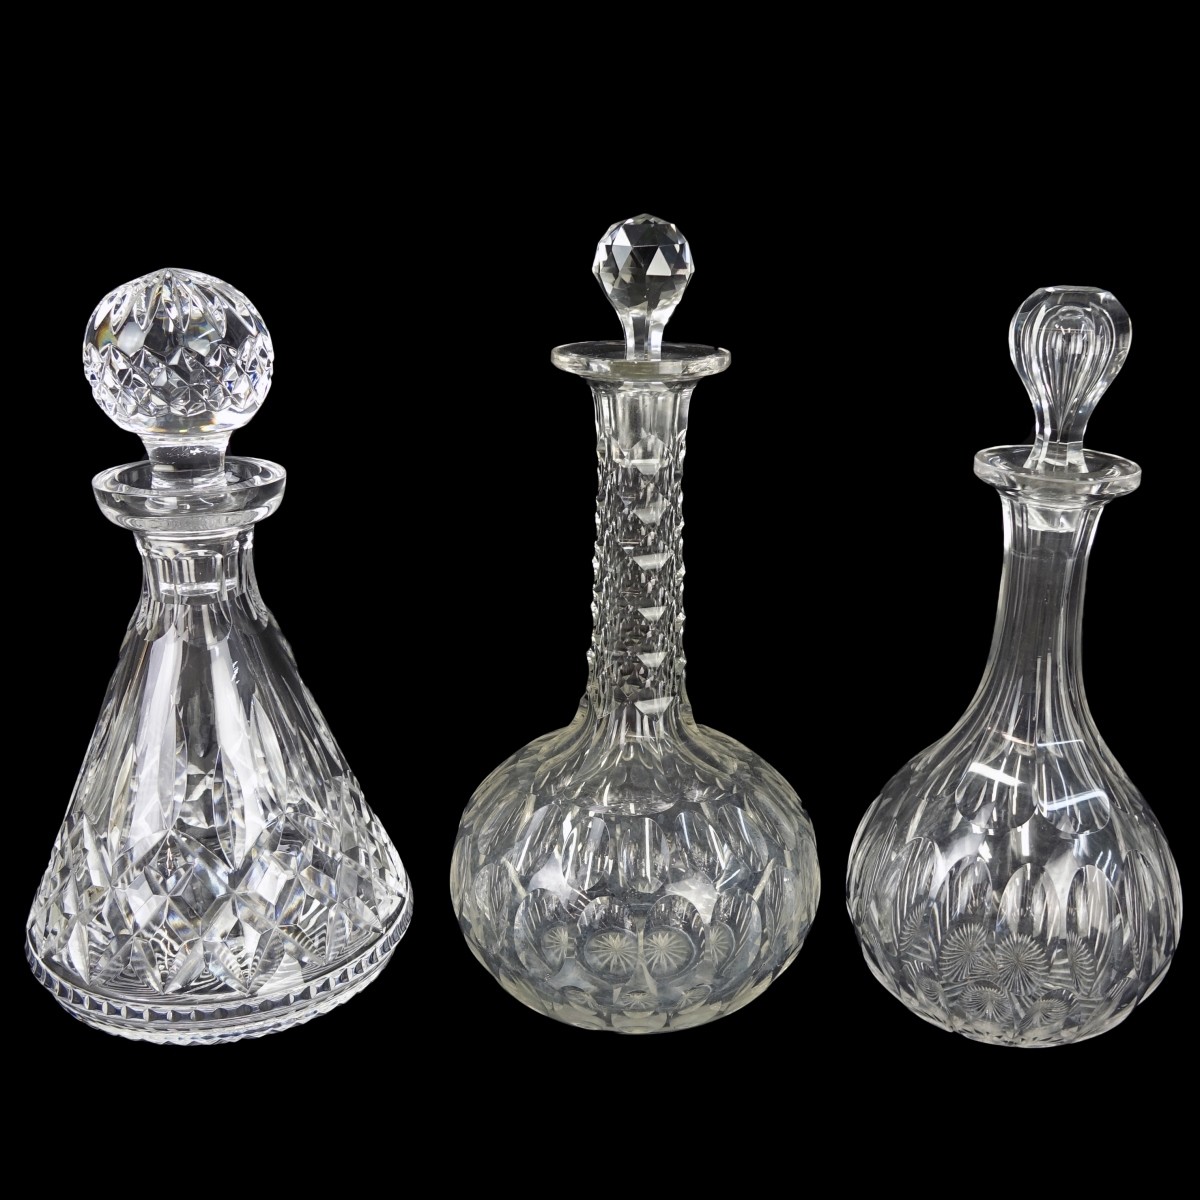 Three Crystal Decanters